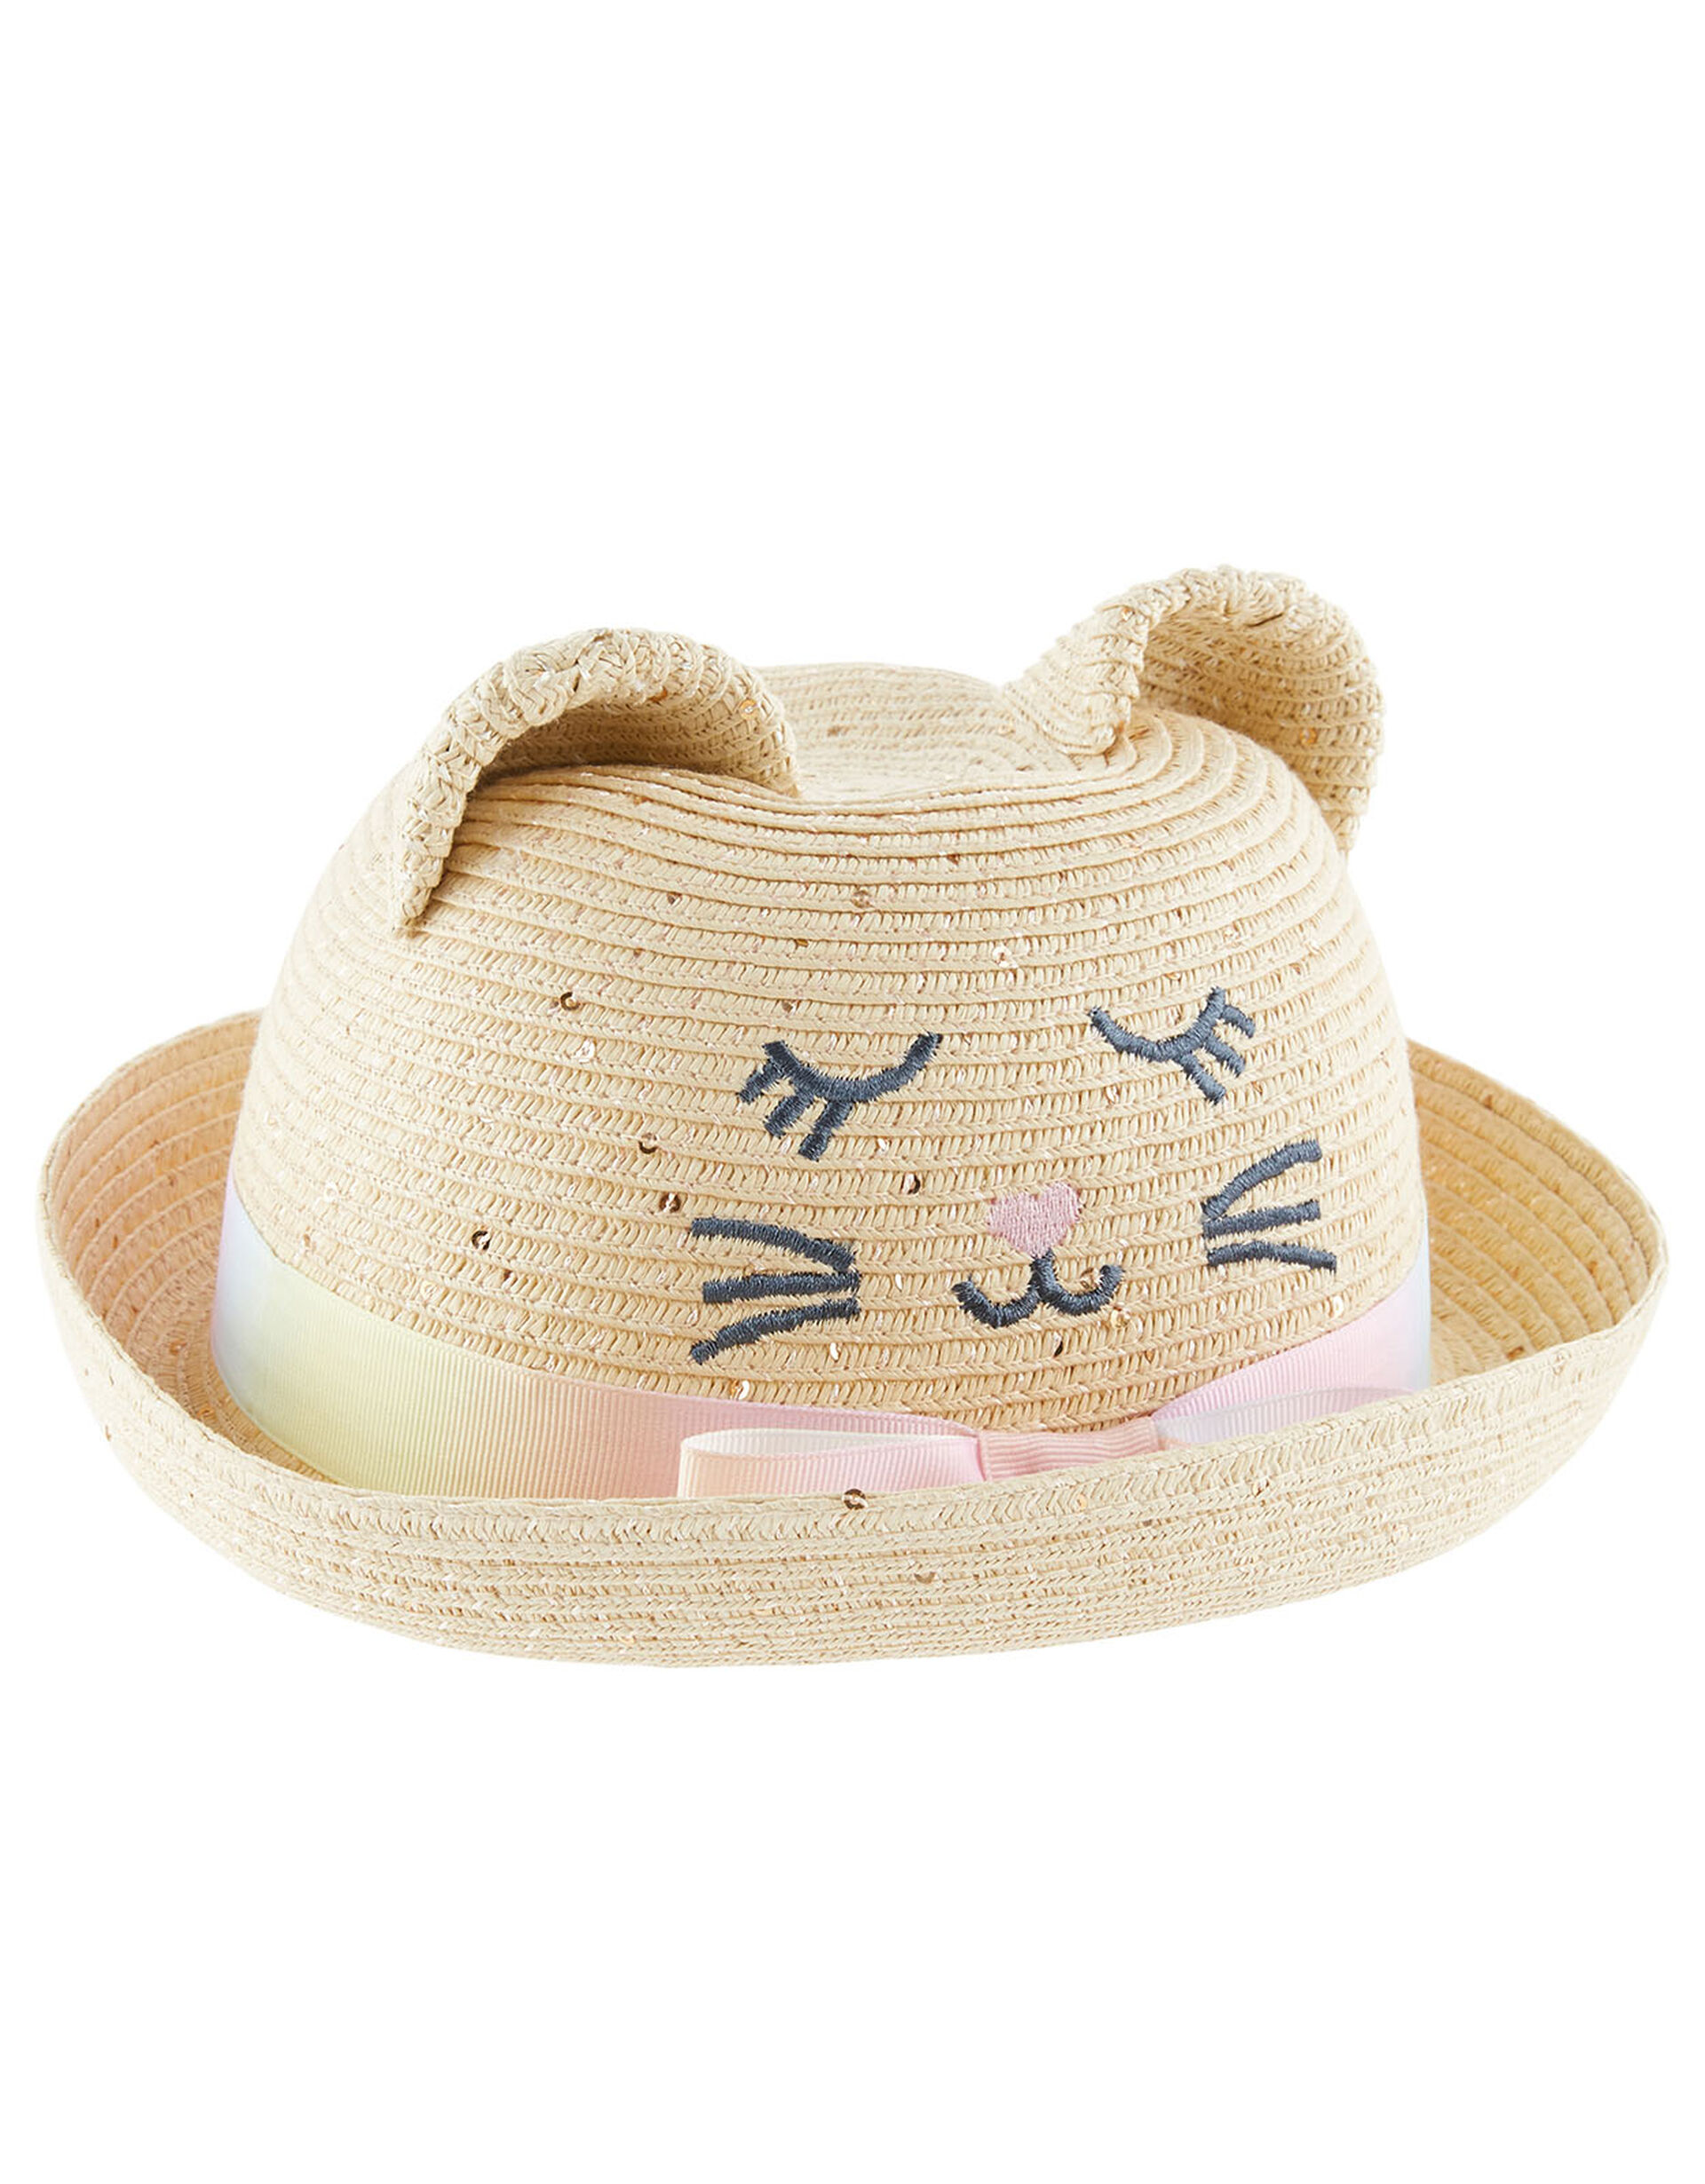 Baby Kitty Sequin Bowler Hat, Natural (NATURAL), large